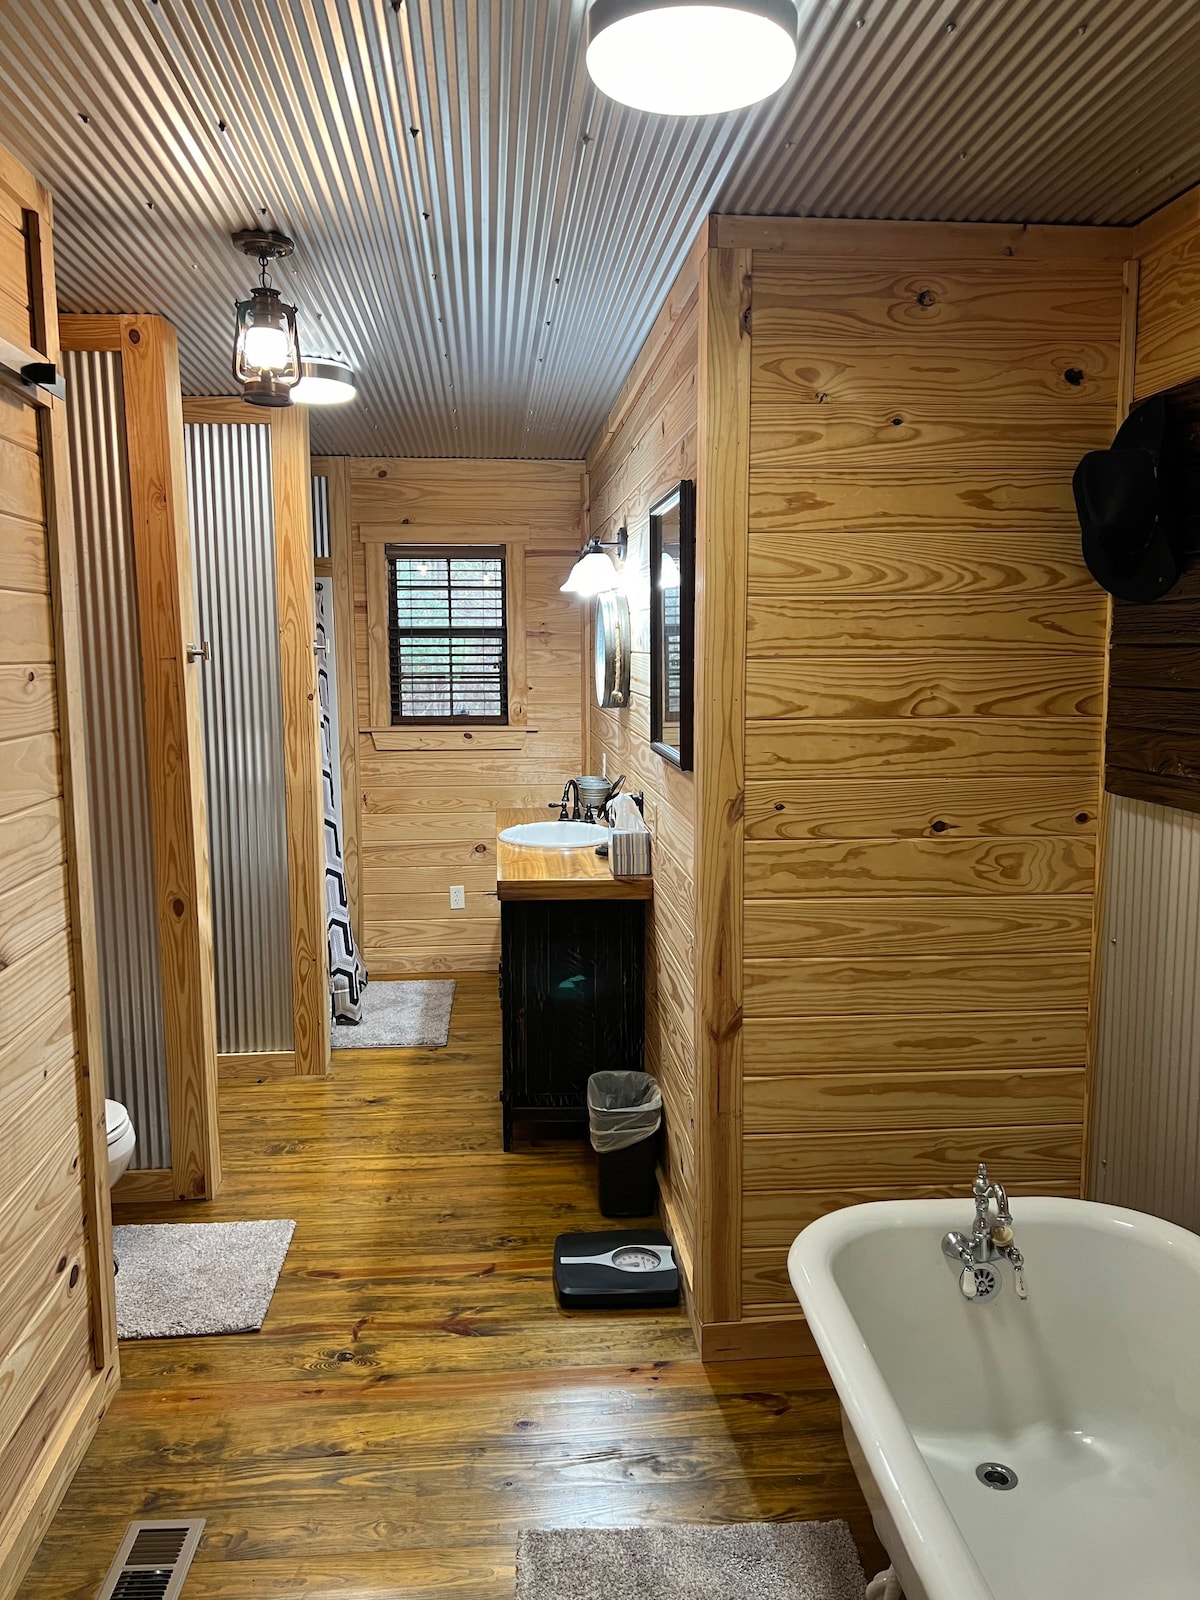 Cozy Cabin Hideaway